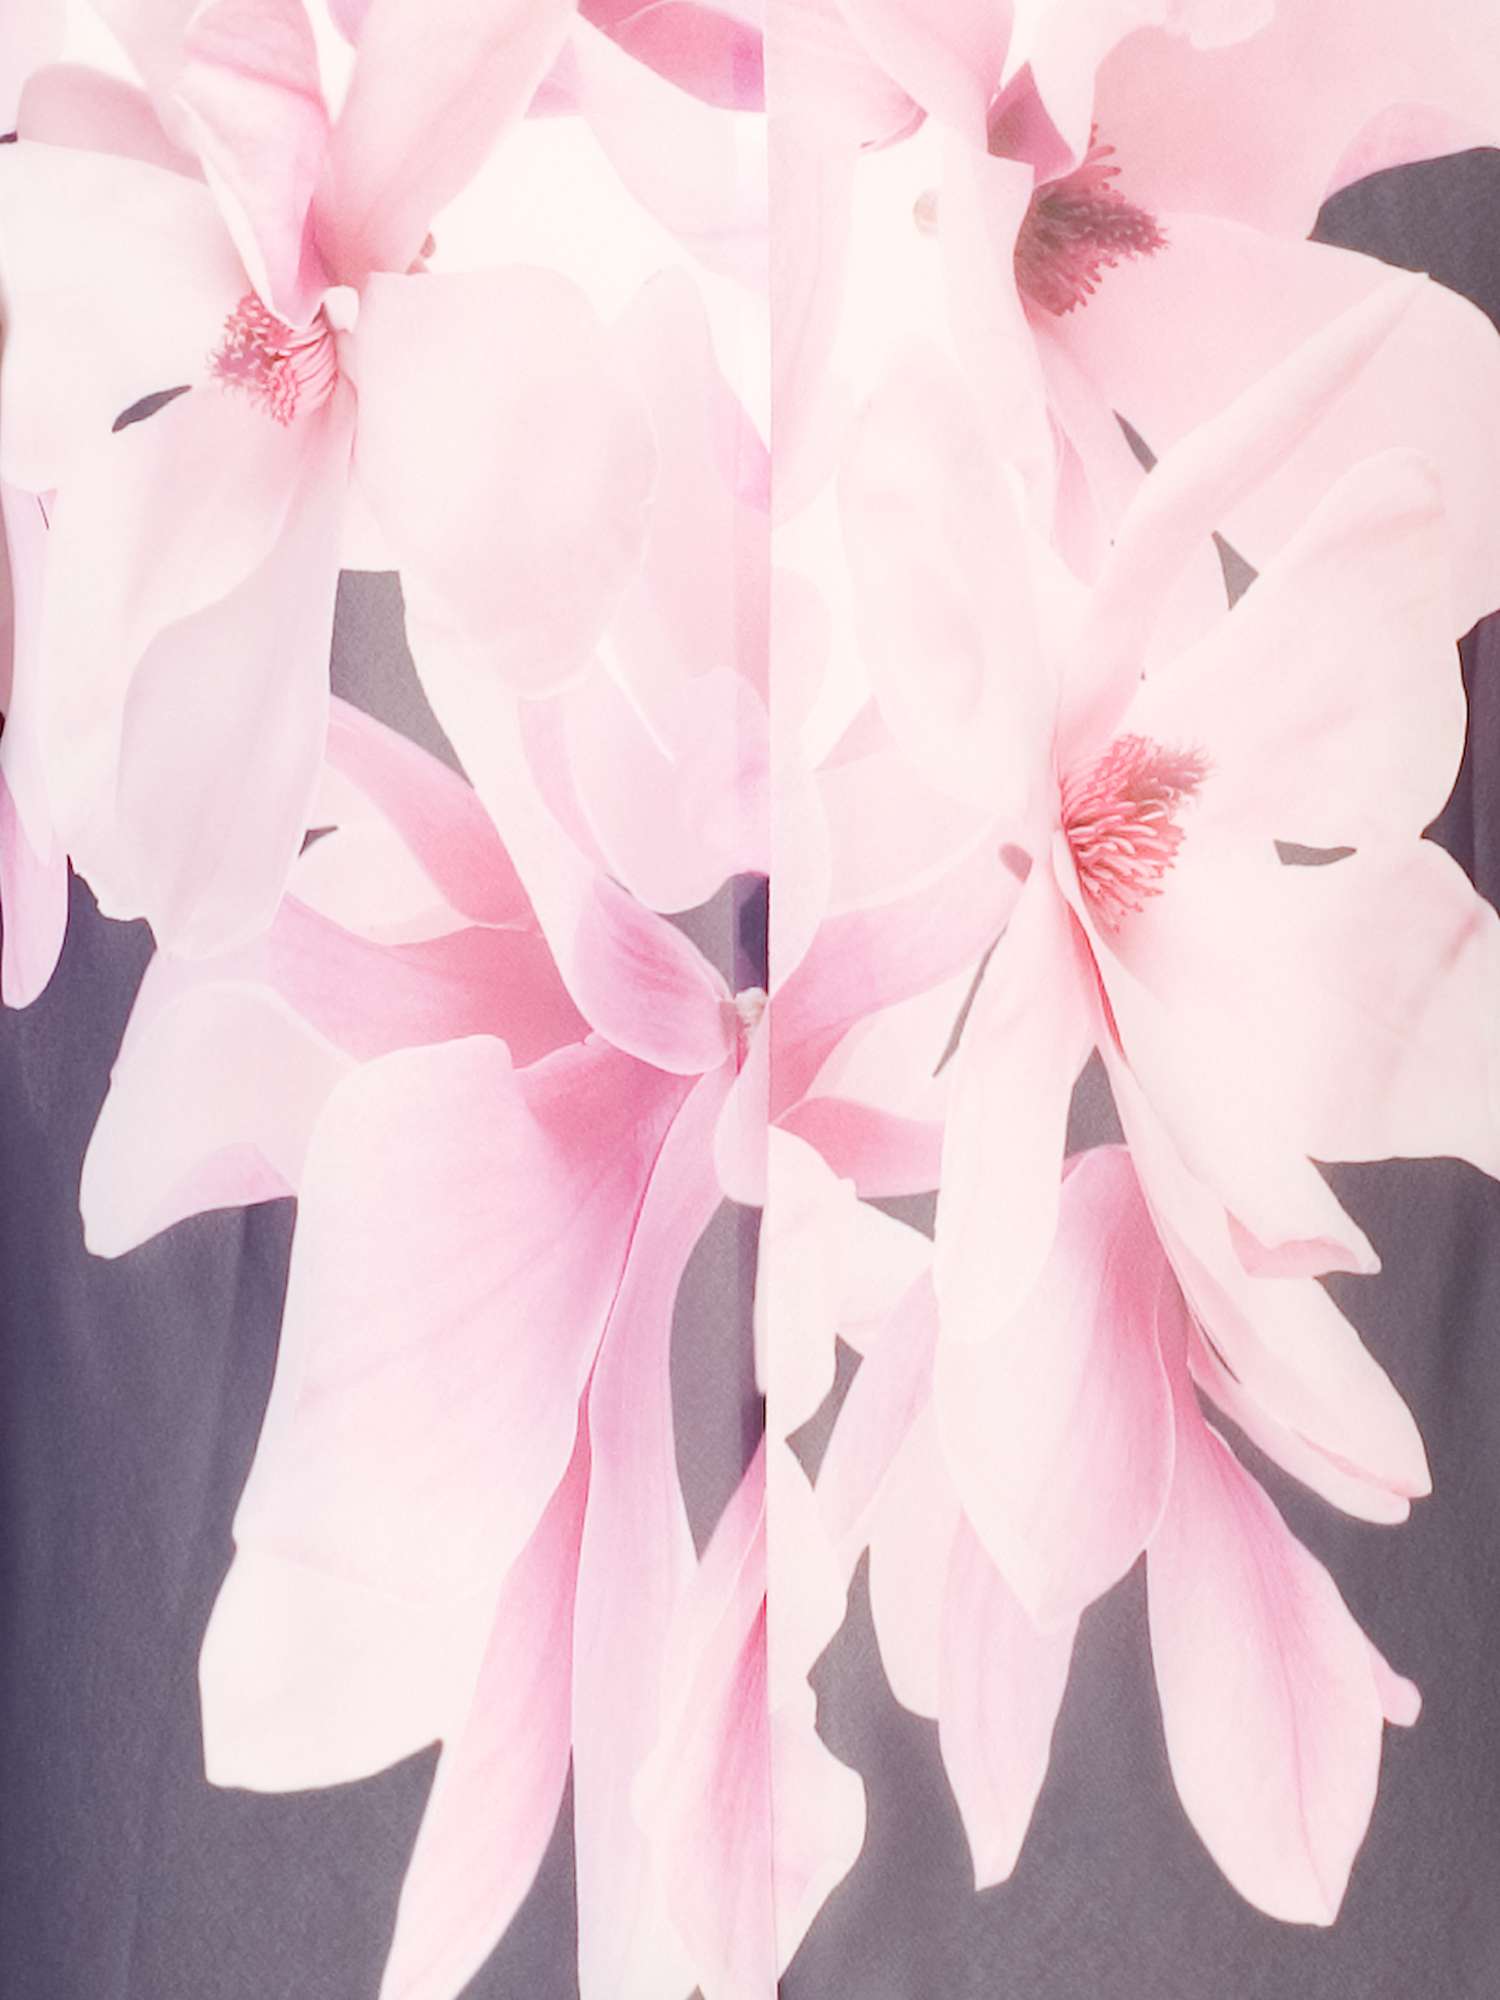 Buy chesca Garland Floral Kimono, Violetta/Pink Online at johnlewis.com